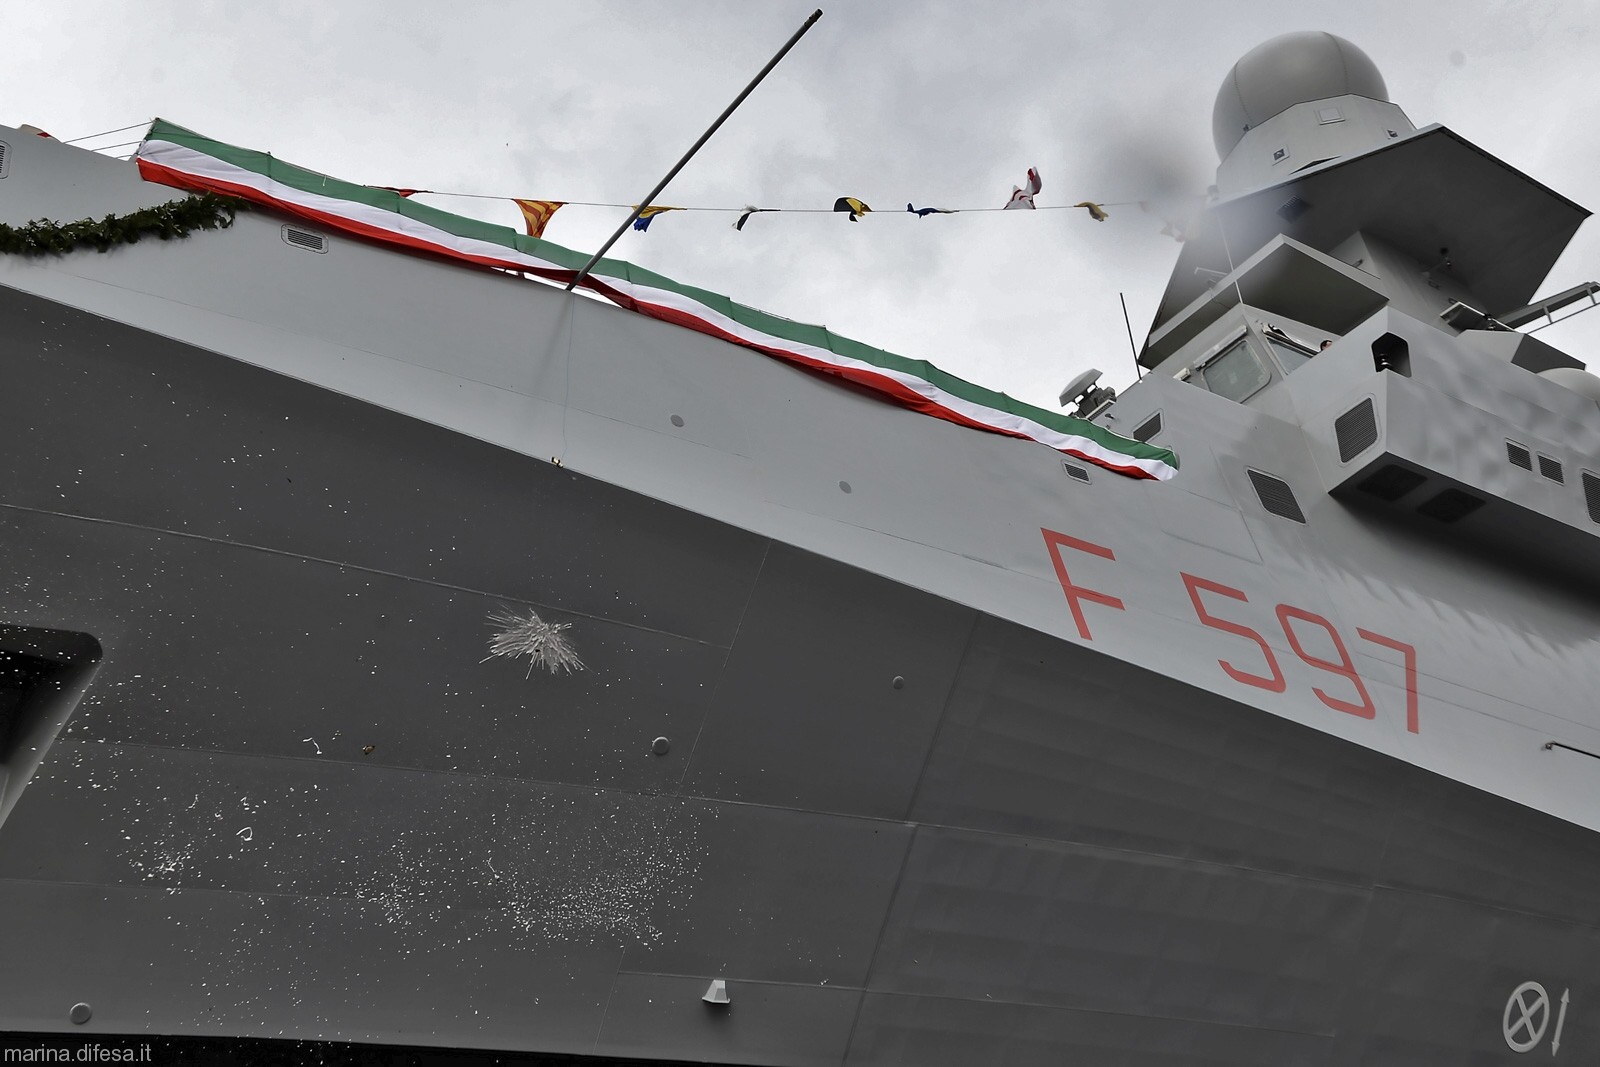 f-597 antonio marceglia its nave bergamini fremm class guided missile frigate italian navy marina militare 15